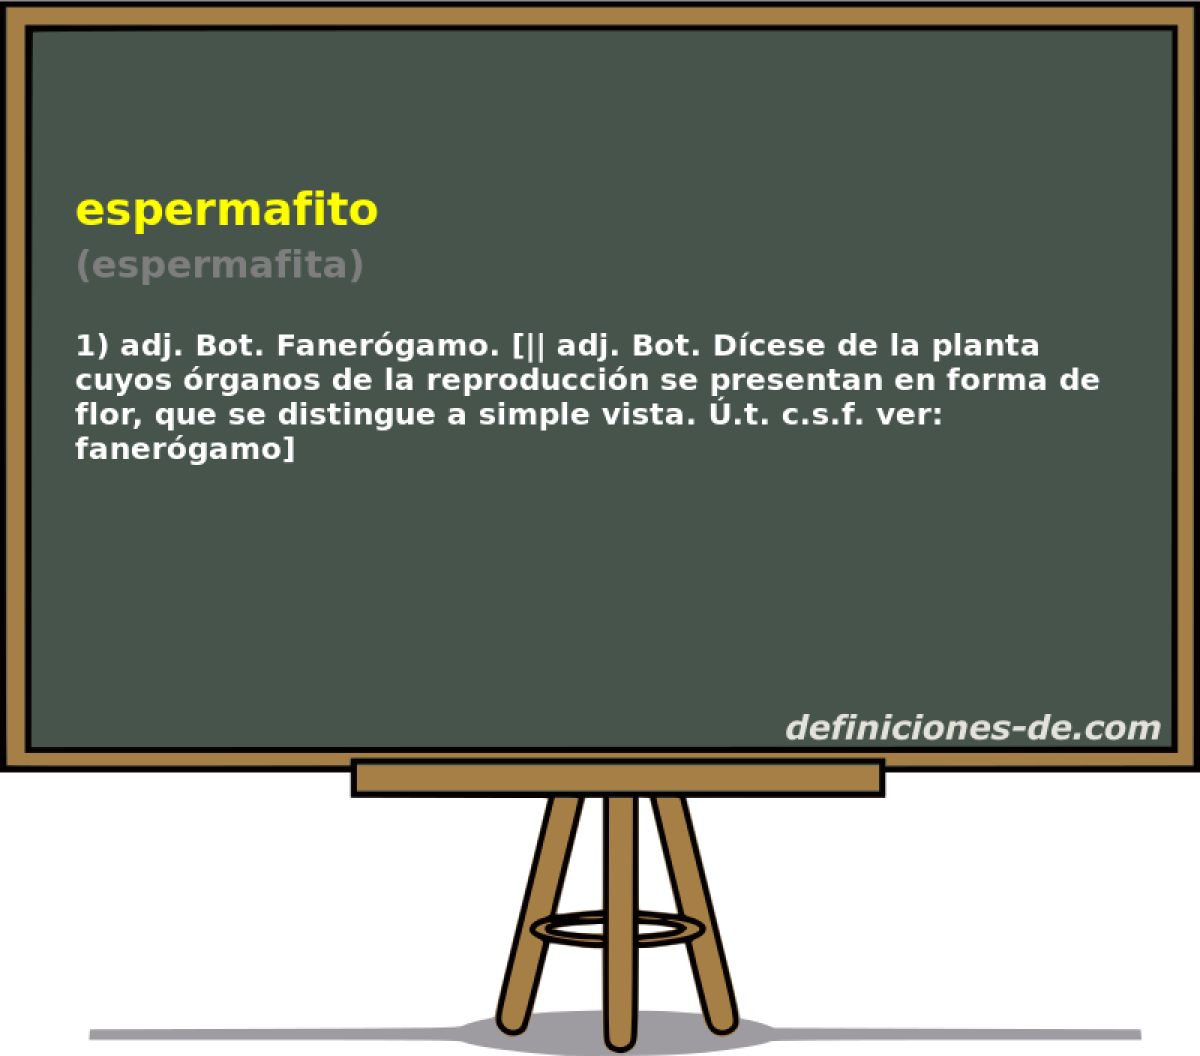 espermafito (espermafita)